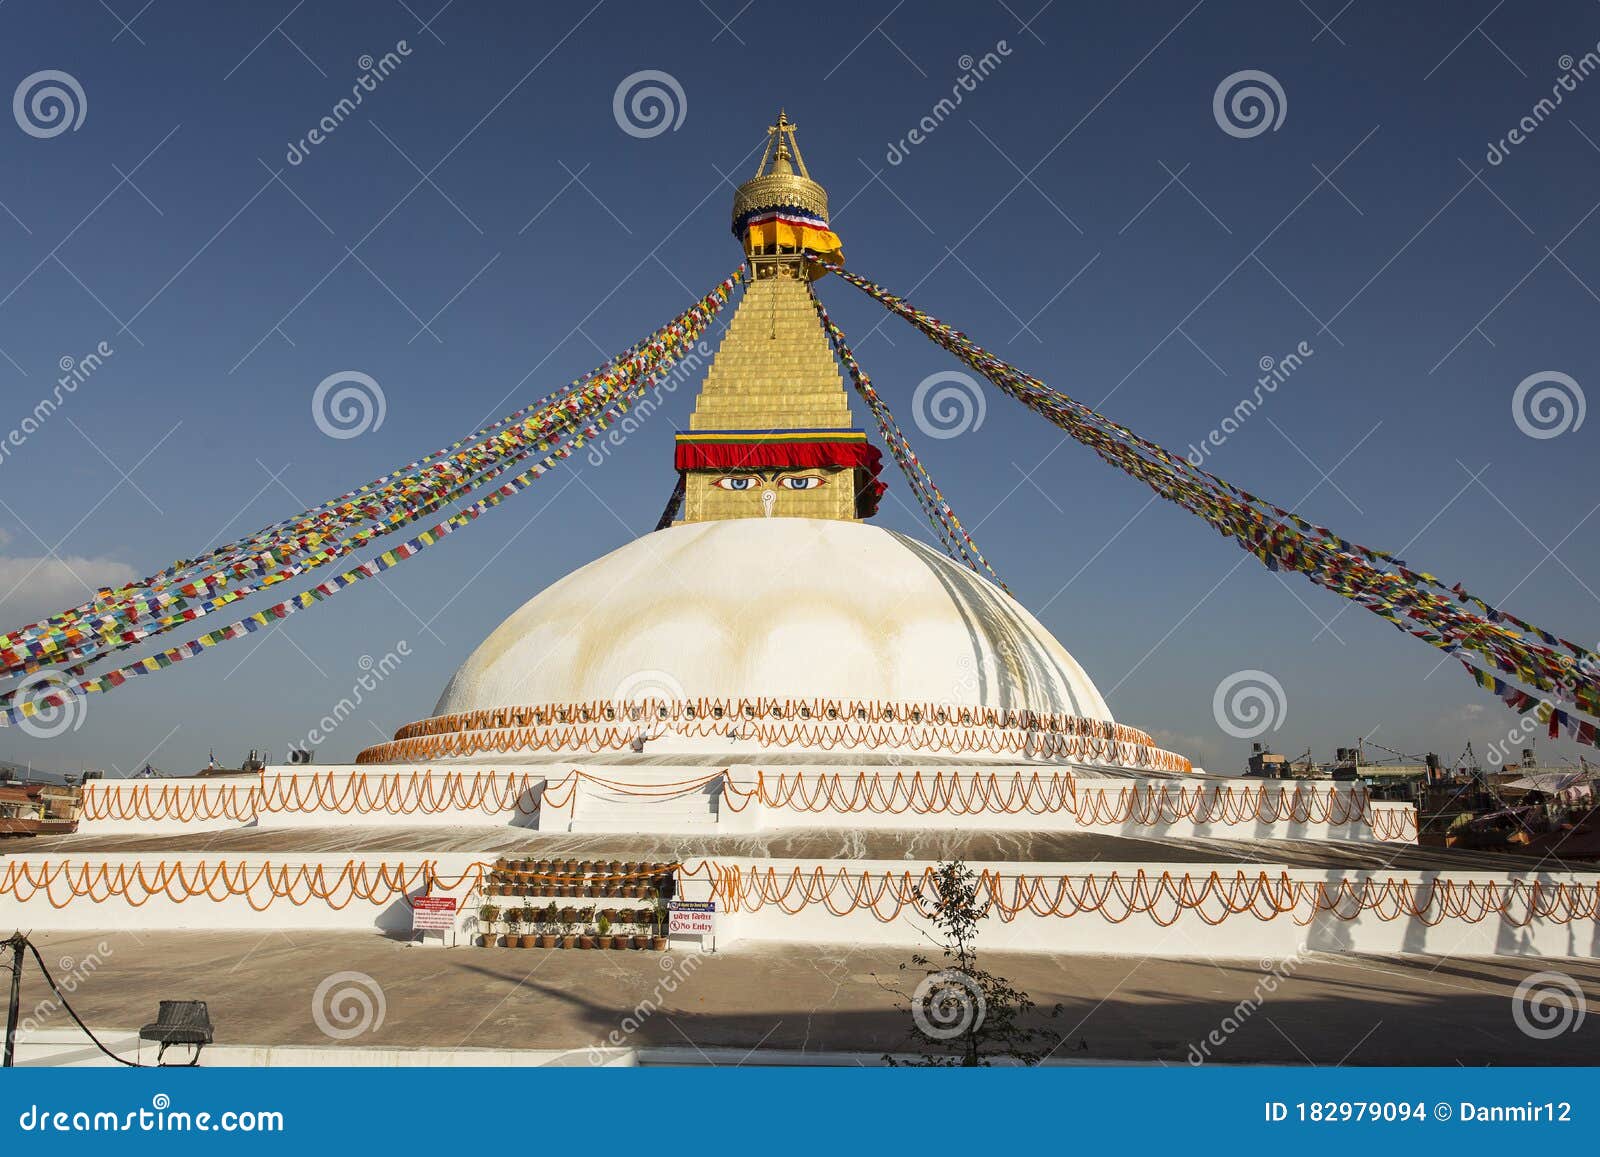 boudhanath stupa in kathmandu, nepal. the buddhist stupa of boudhanath dominates the skyline, it is one of the largest stupas in